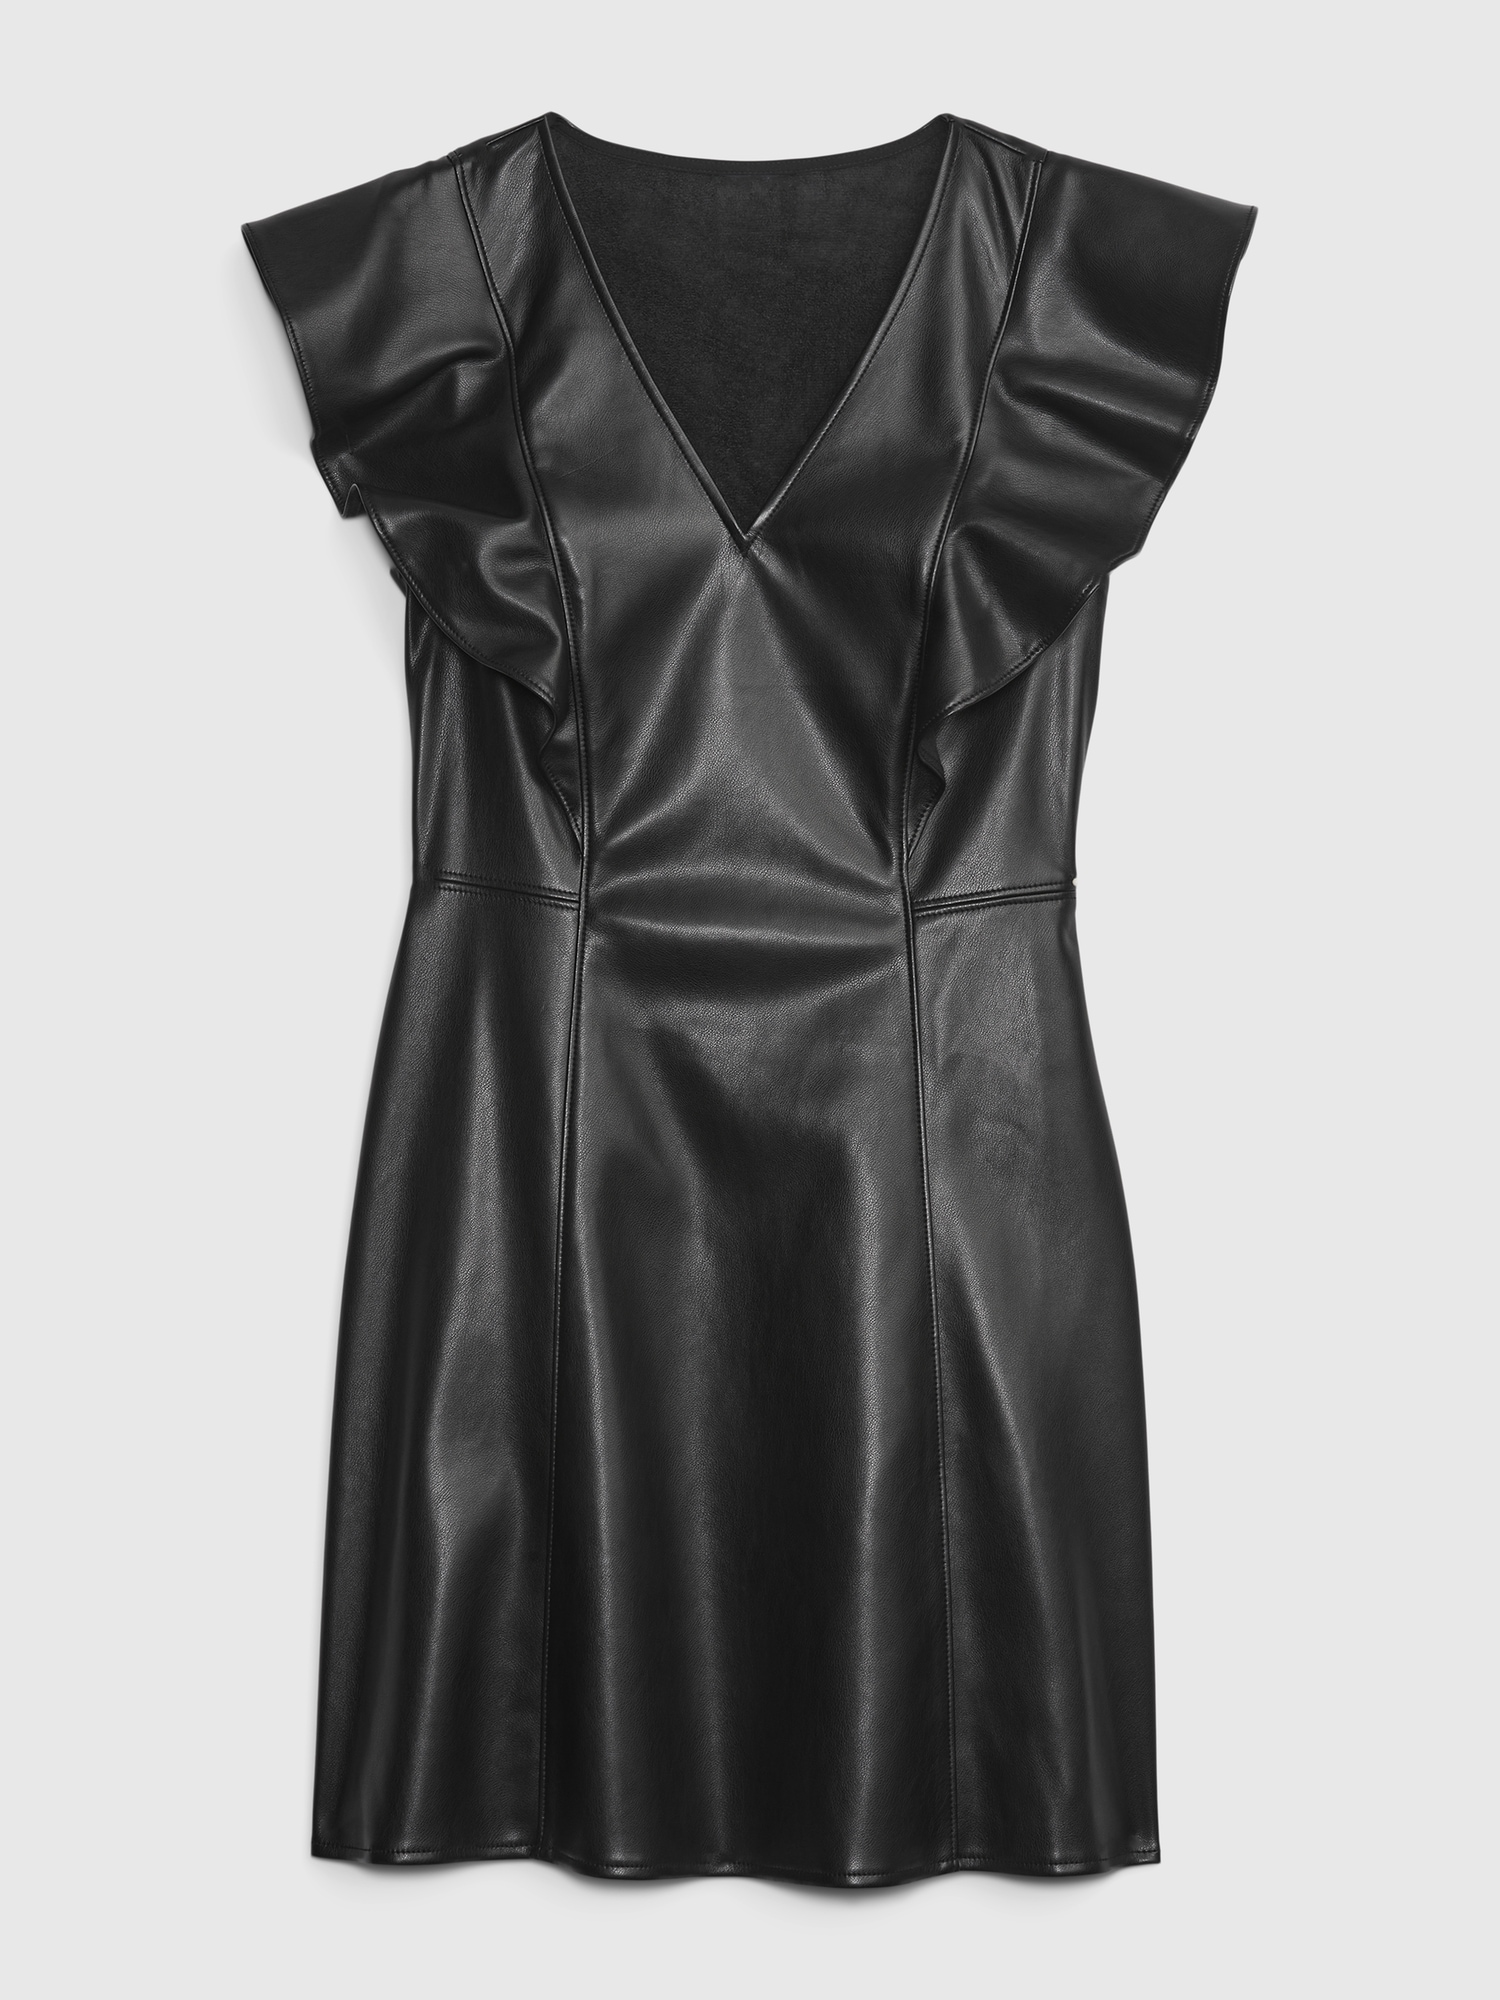 Leather mini dress Zara Black size S International in Leather